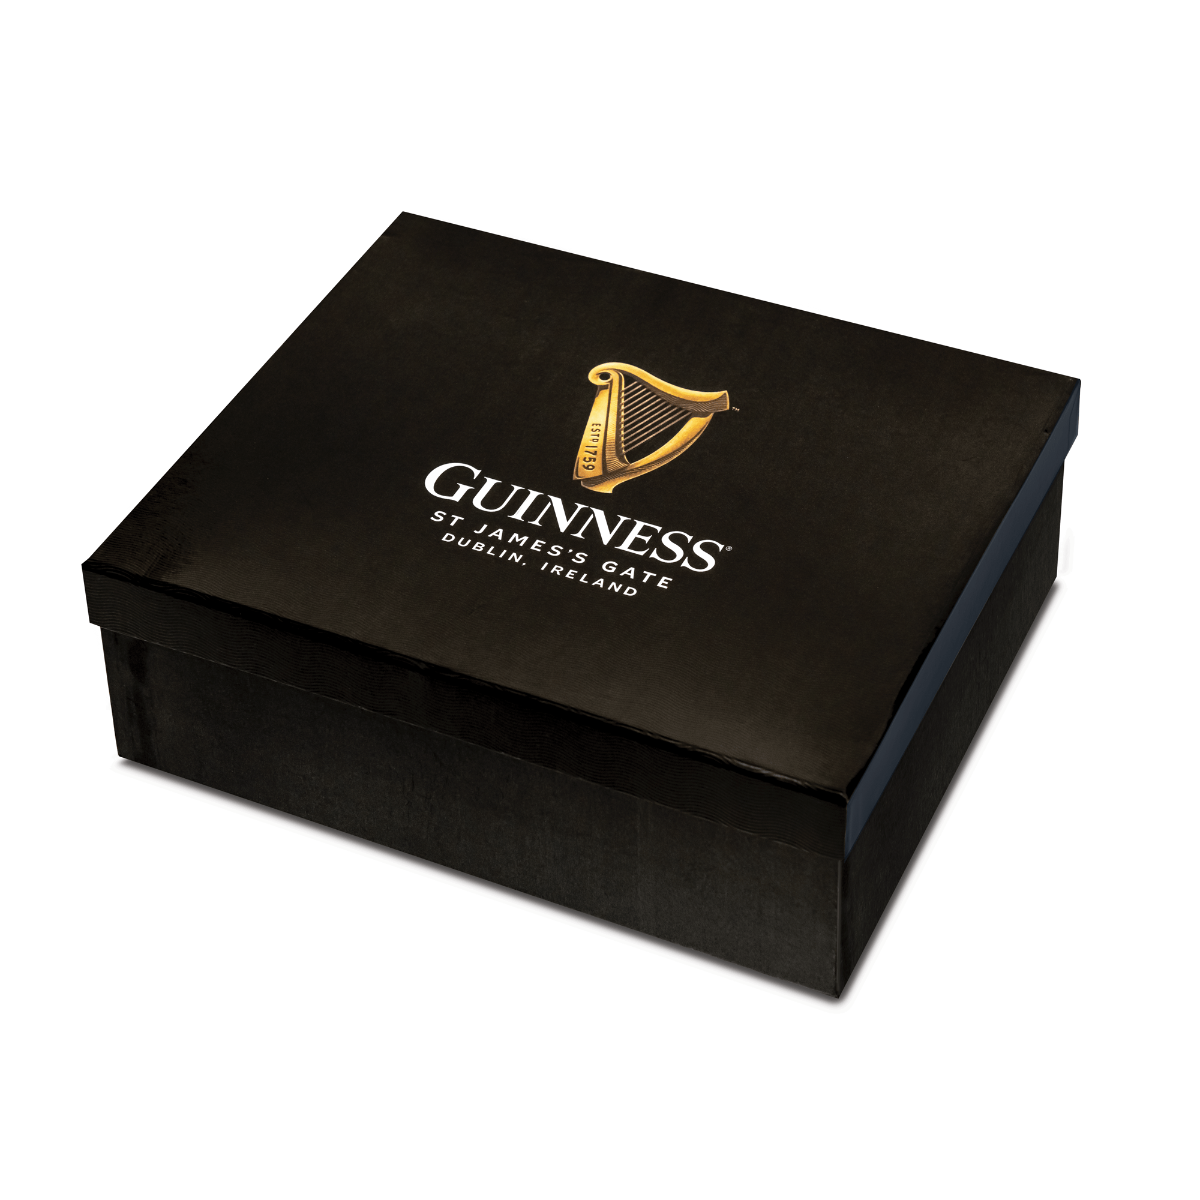 Guinness Toucan Mug Set with a Guinness motif.